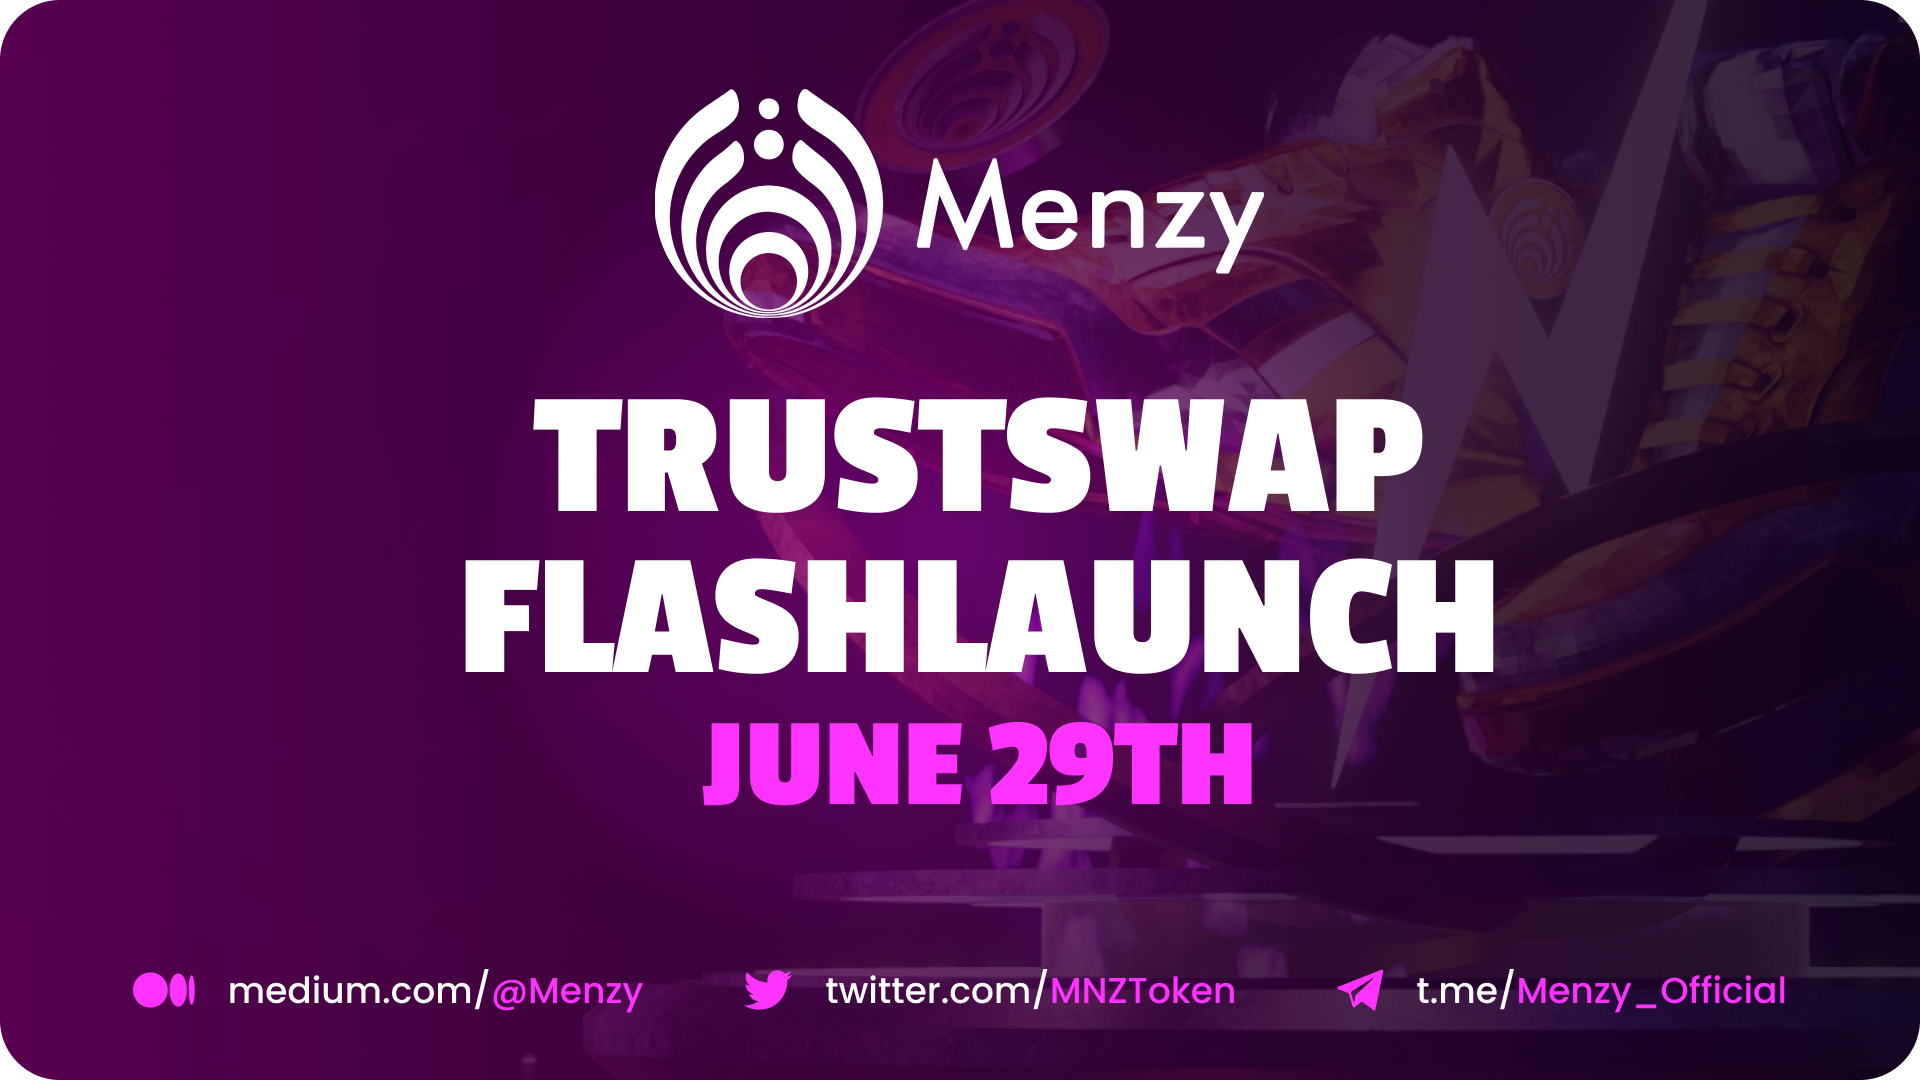 Menzy Announces June 29th FlashLaunch on TrustSwap Launchpad